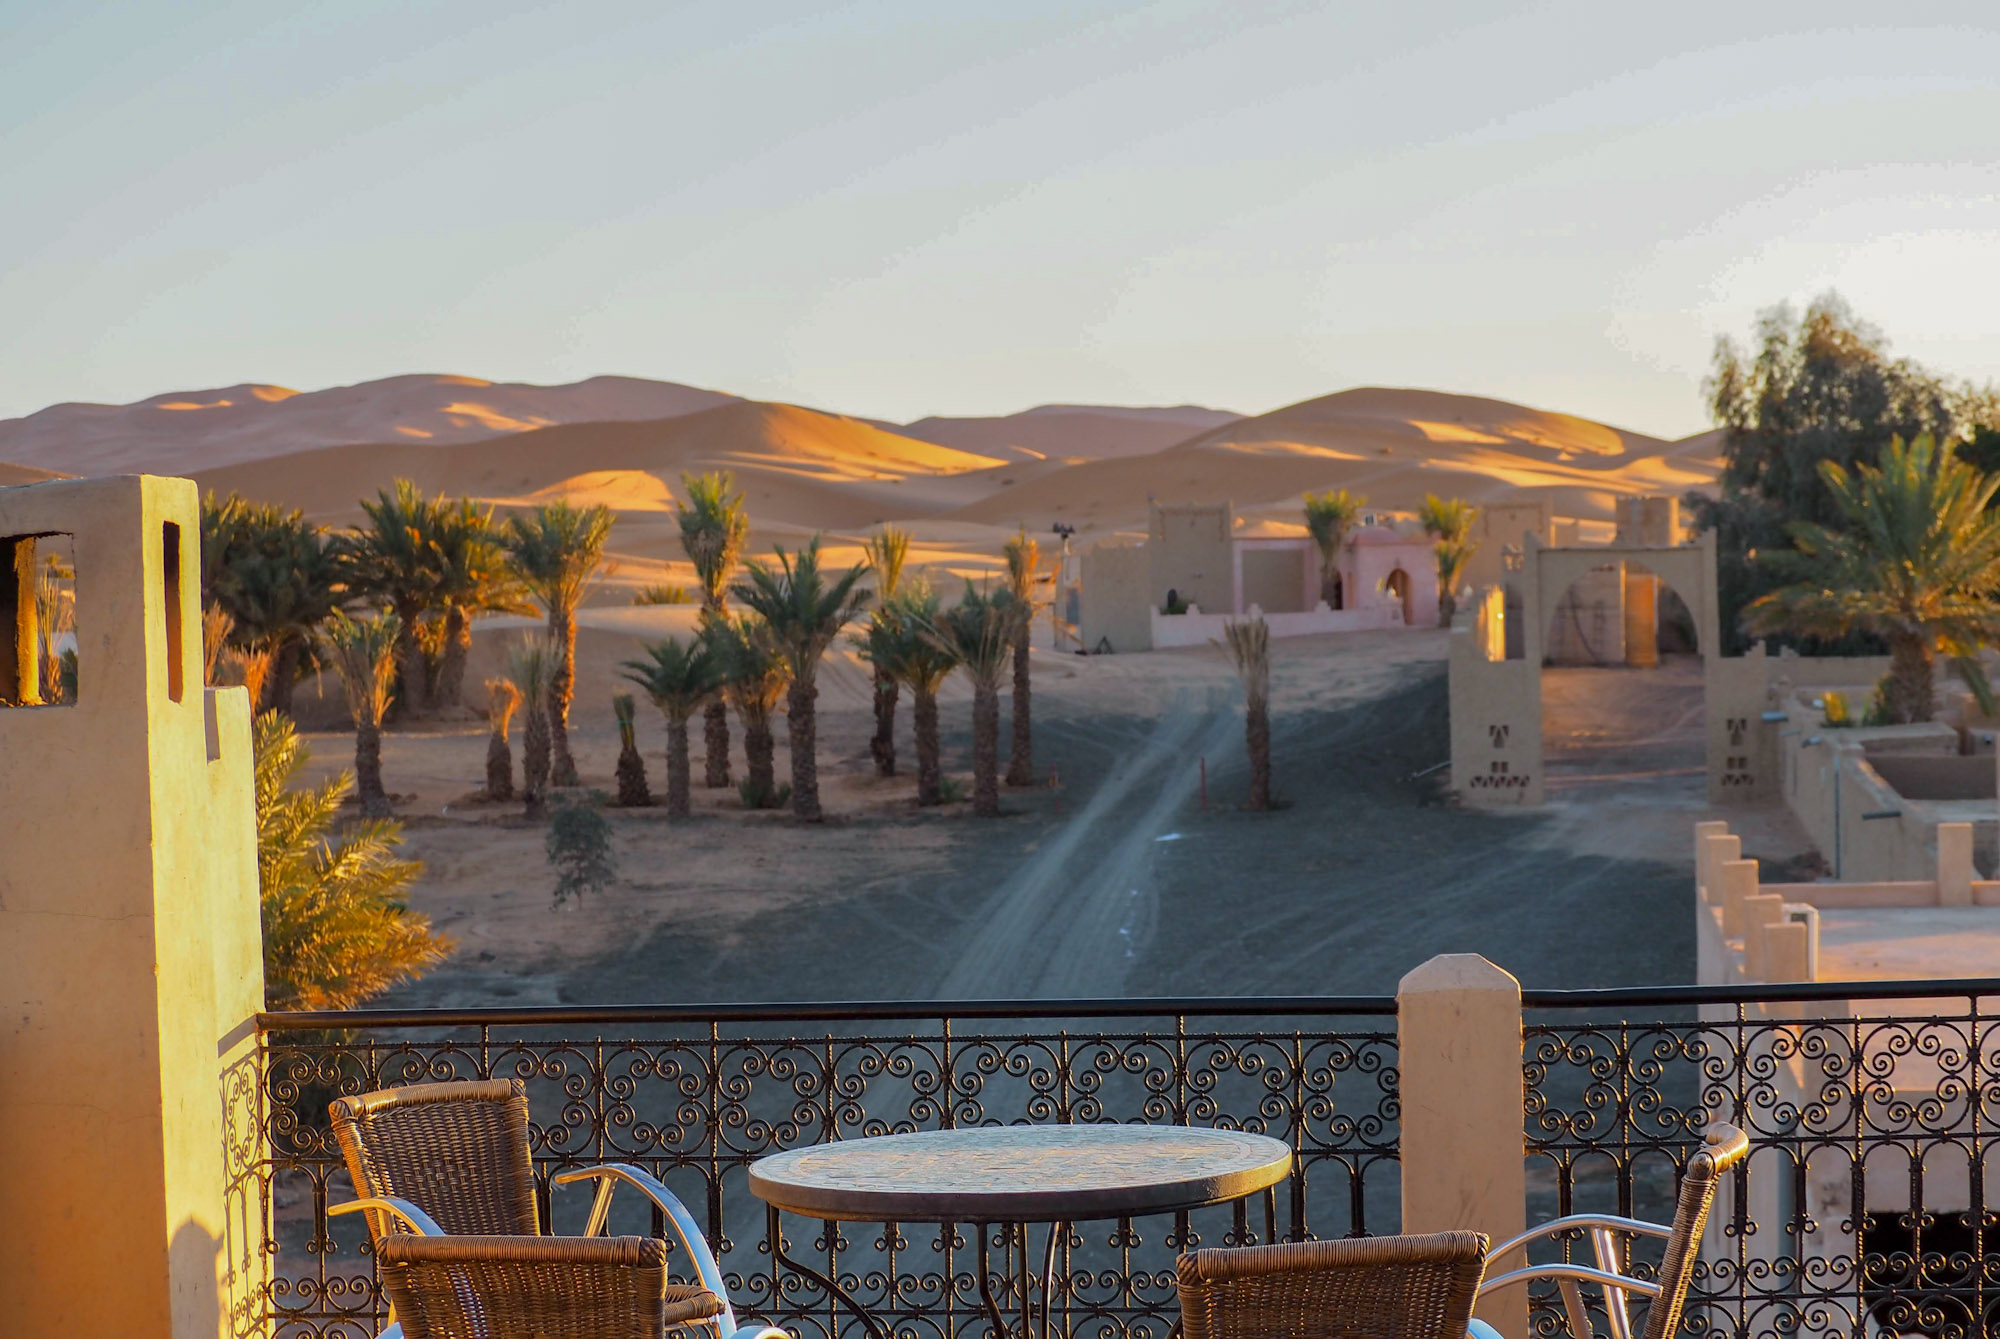 Desert dunes viewed from Hotel Kasbah Moyahut, Merzouga, Morocco